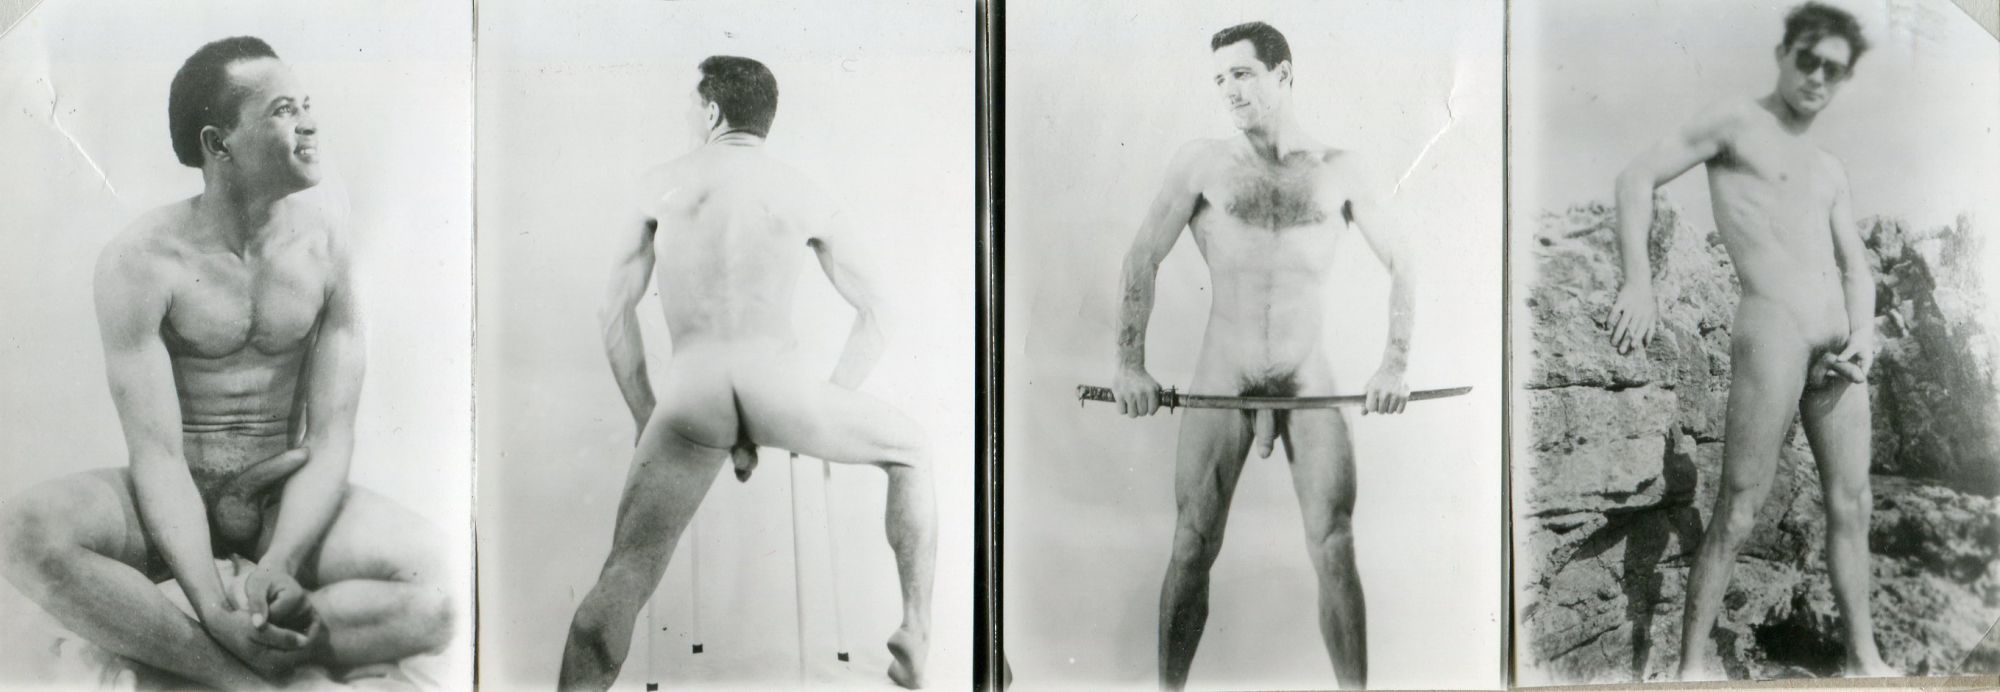 Vintage male nude photos